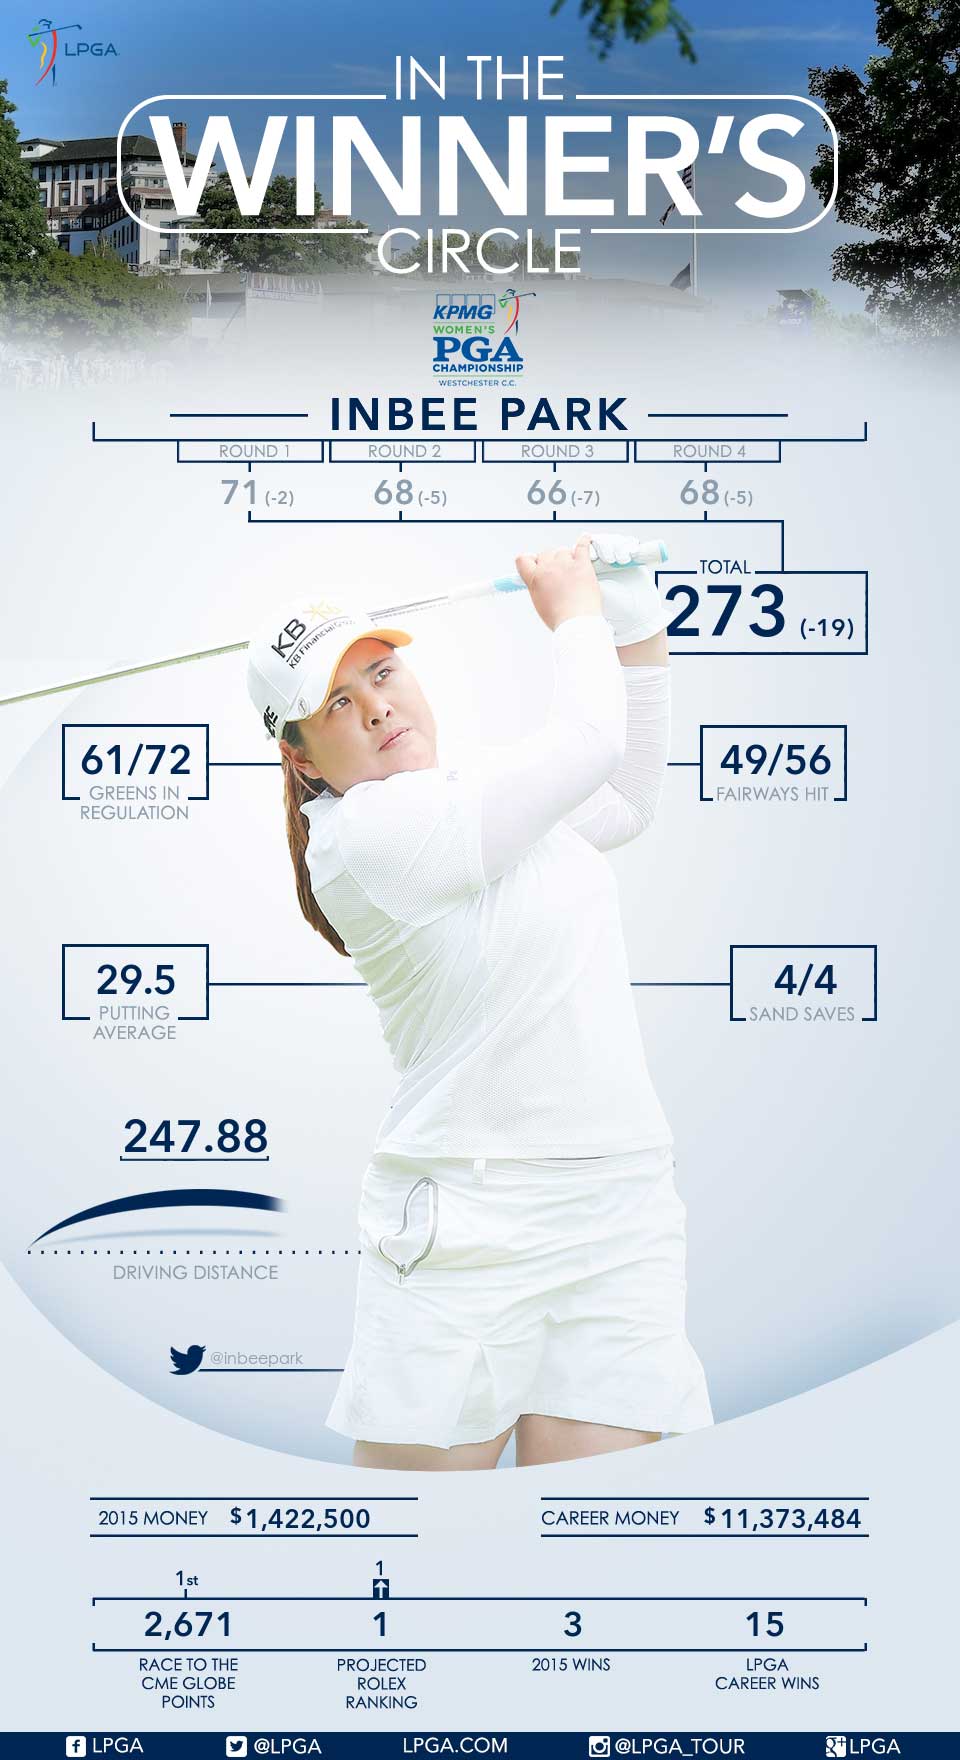 Inbee Park wins the 2015 KPMG Women's PGA Championship